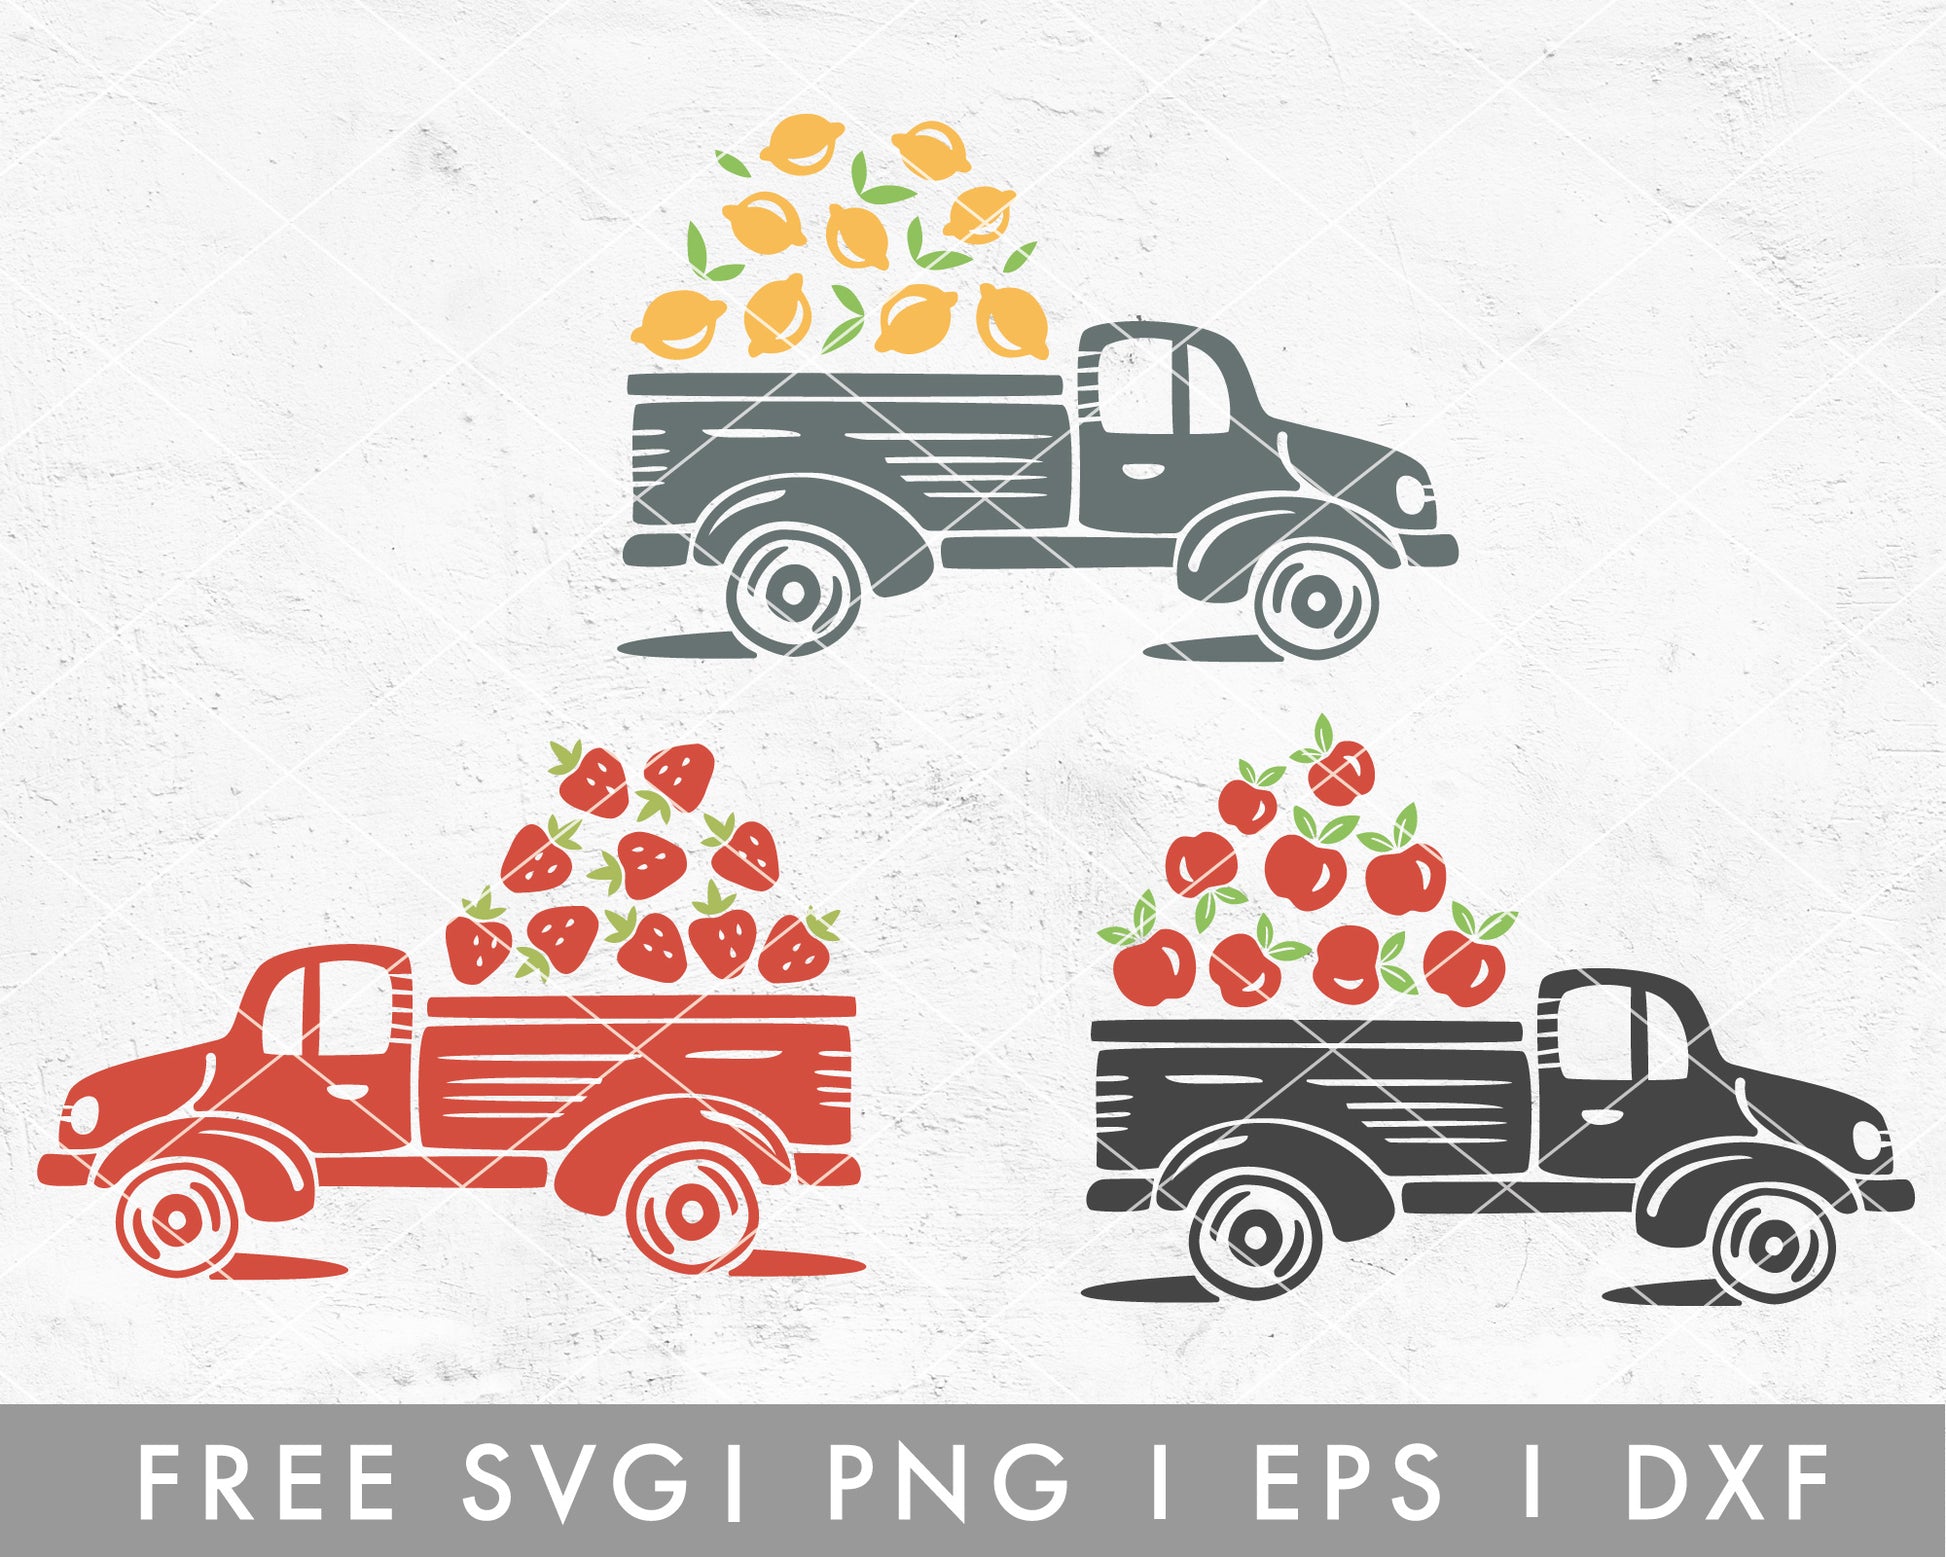 FREE Vintage Truck SVG | Fruit Farm Cut File for Cricut, Cameo Silhouette | Free SVG Cut File